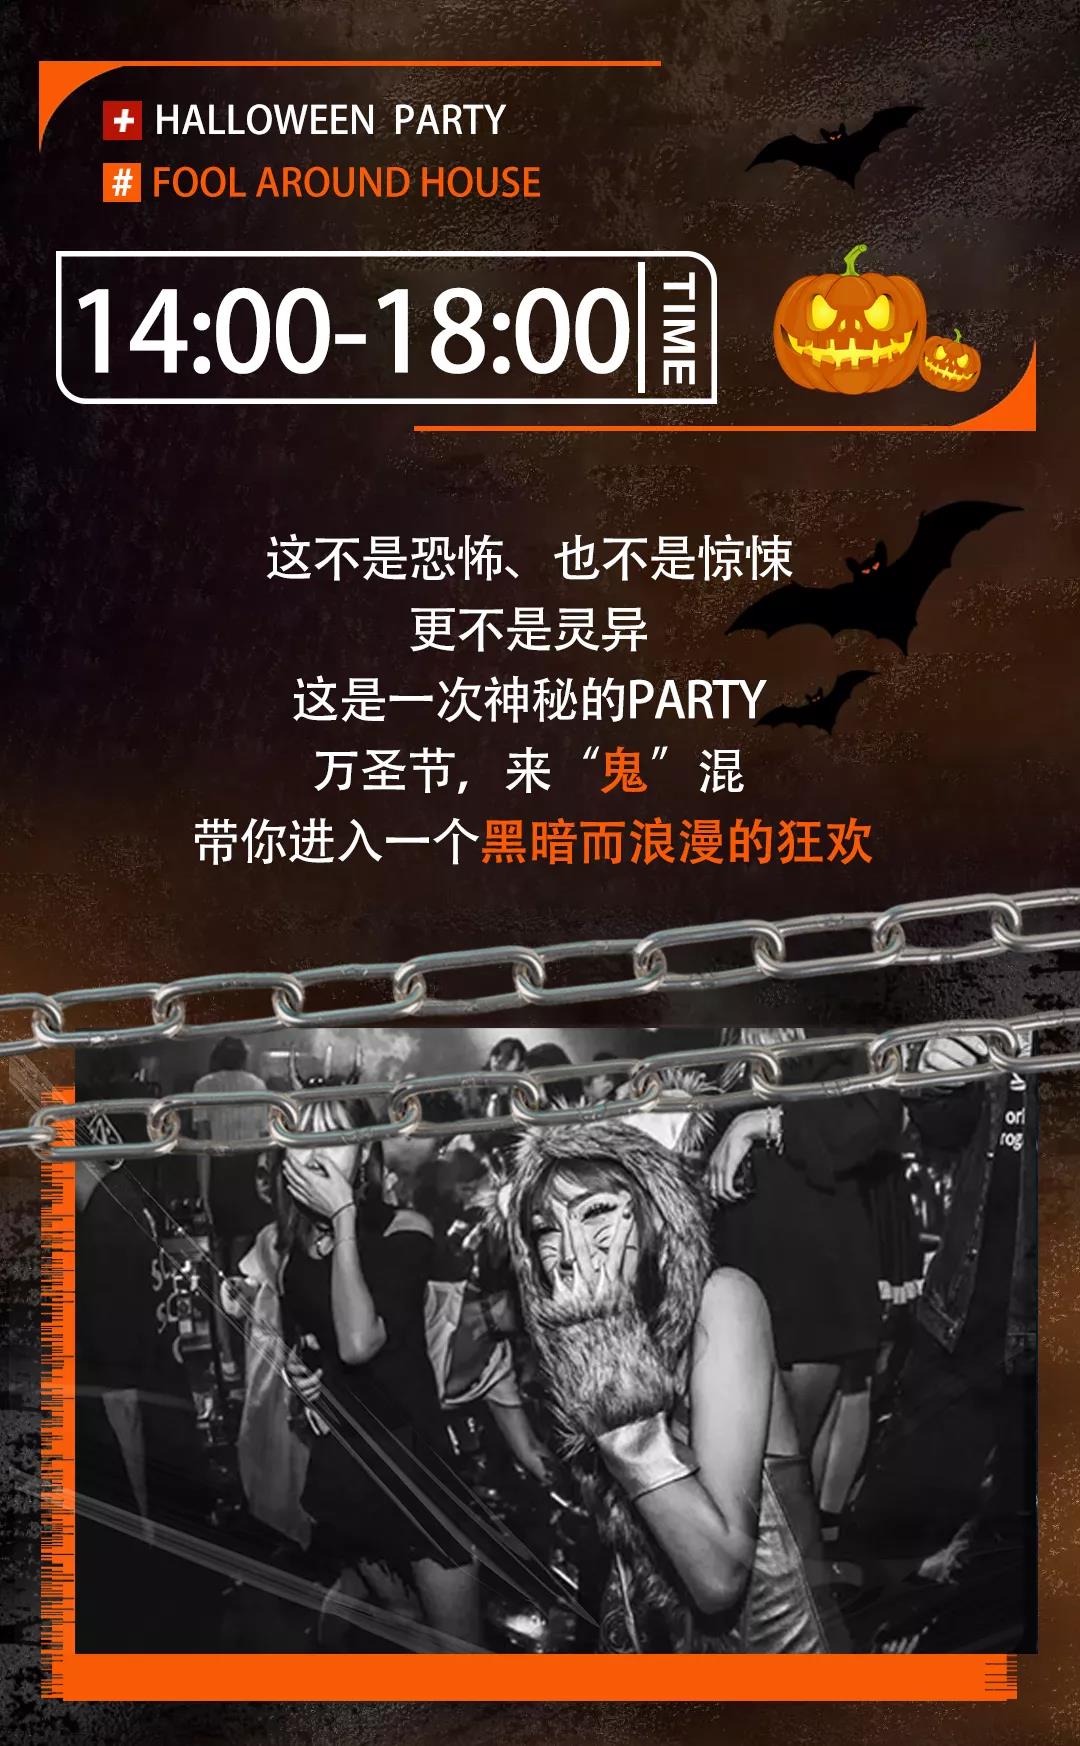 *YOULO万圣电音节南京站|包场最火Space Plus Club，打造一场“百鬼开燥”脱单派对，电音狂欢，血色奇装！